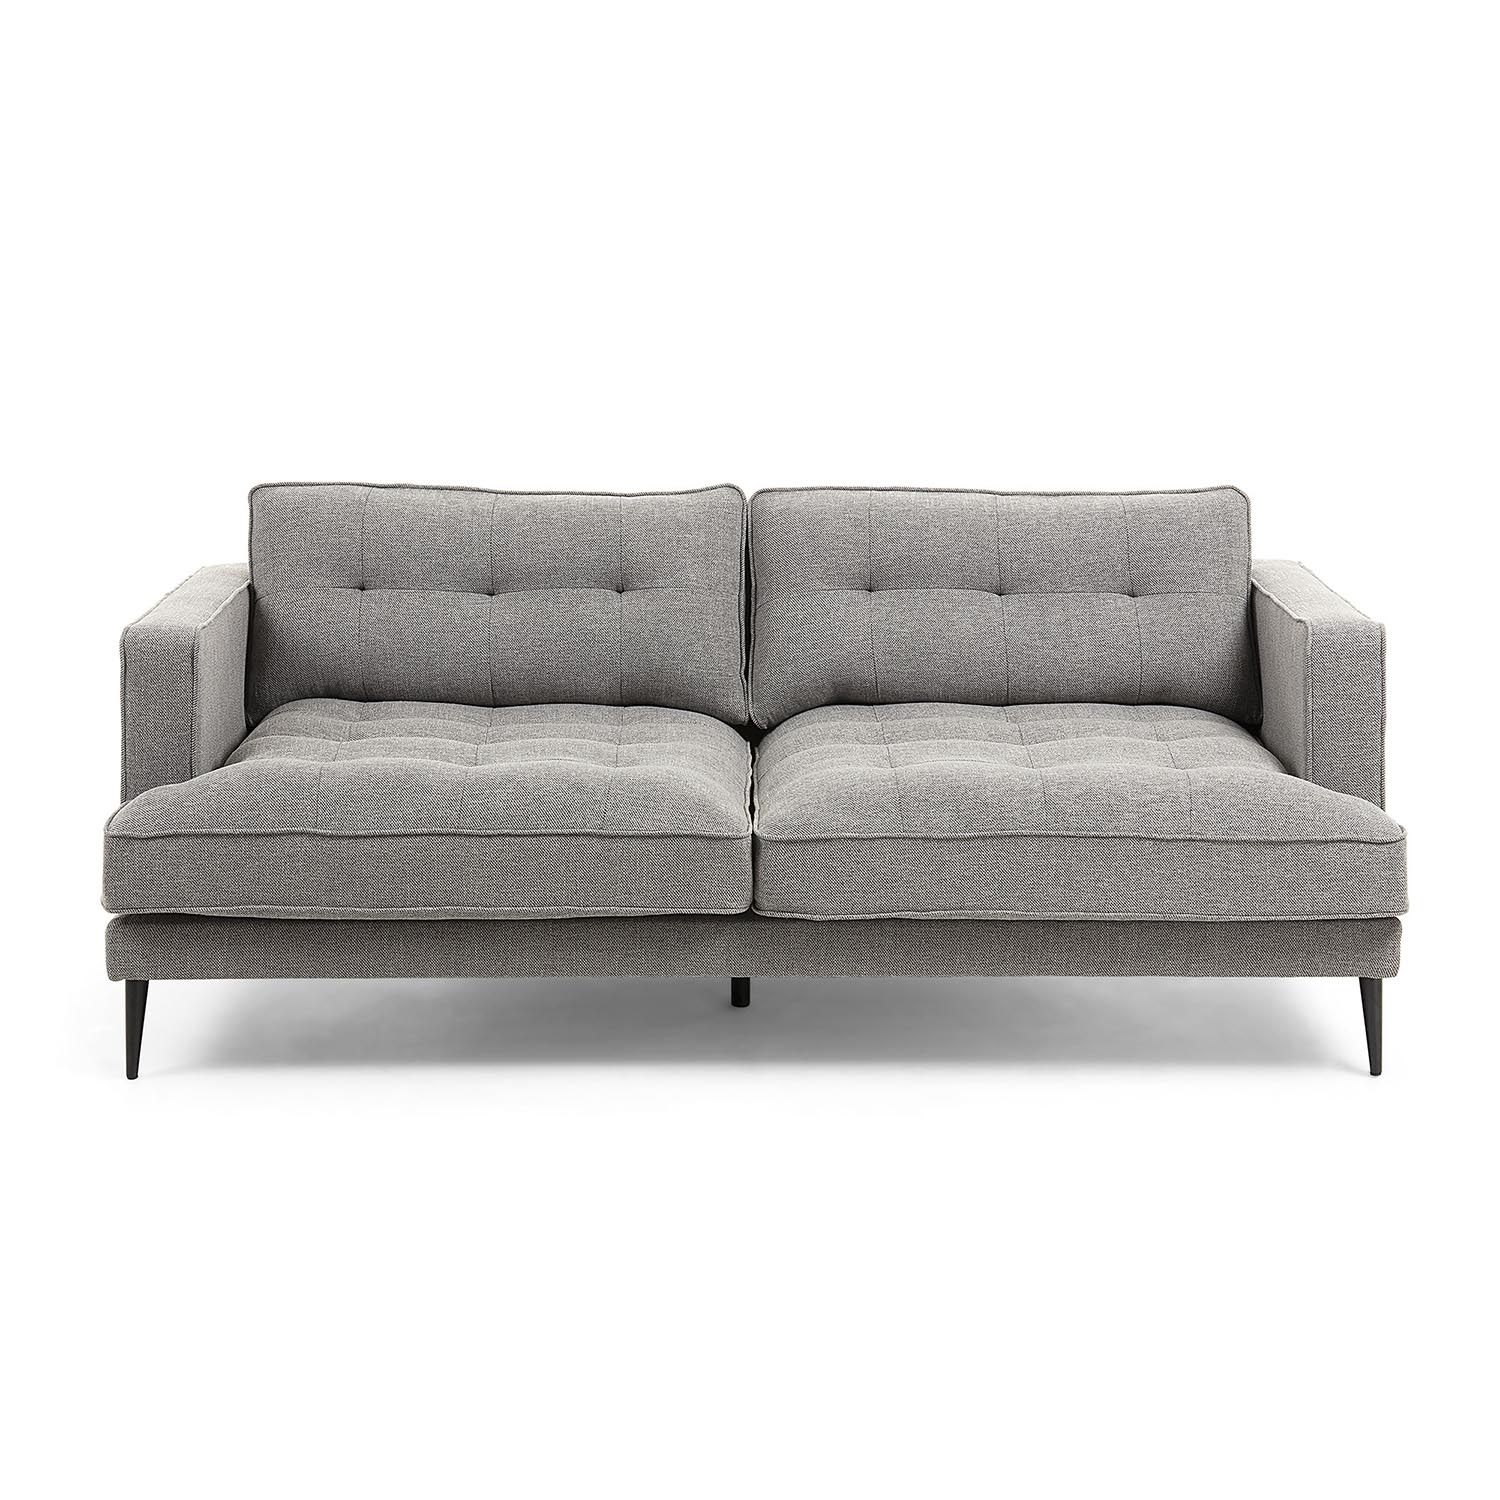 LAFORMA Vinny 3 pers. sofa - grå stof og sort stål